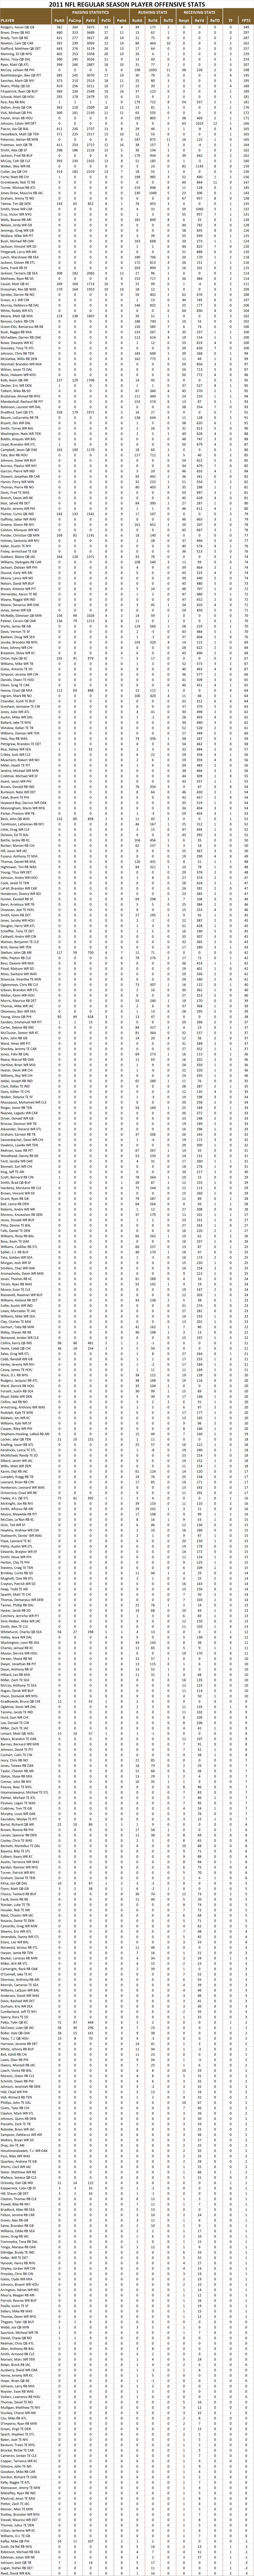 2011 National Football League Pool Season Player Offensive Stats